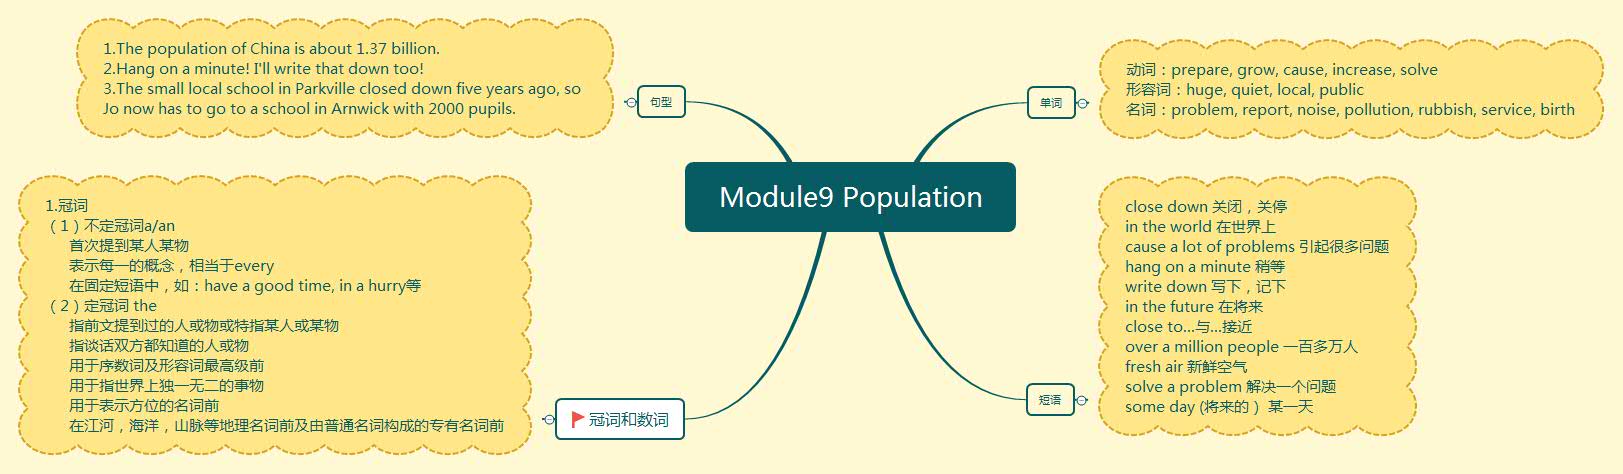 Module9 Population.jpg